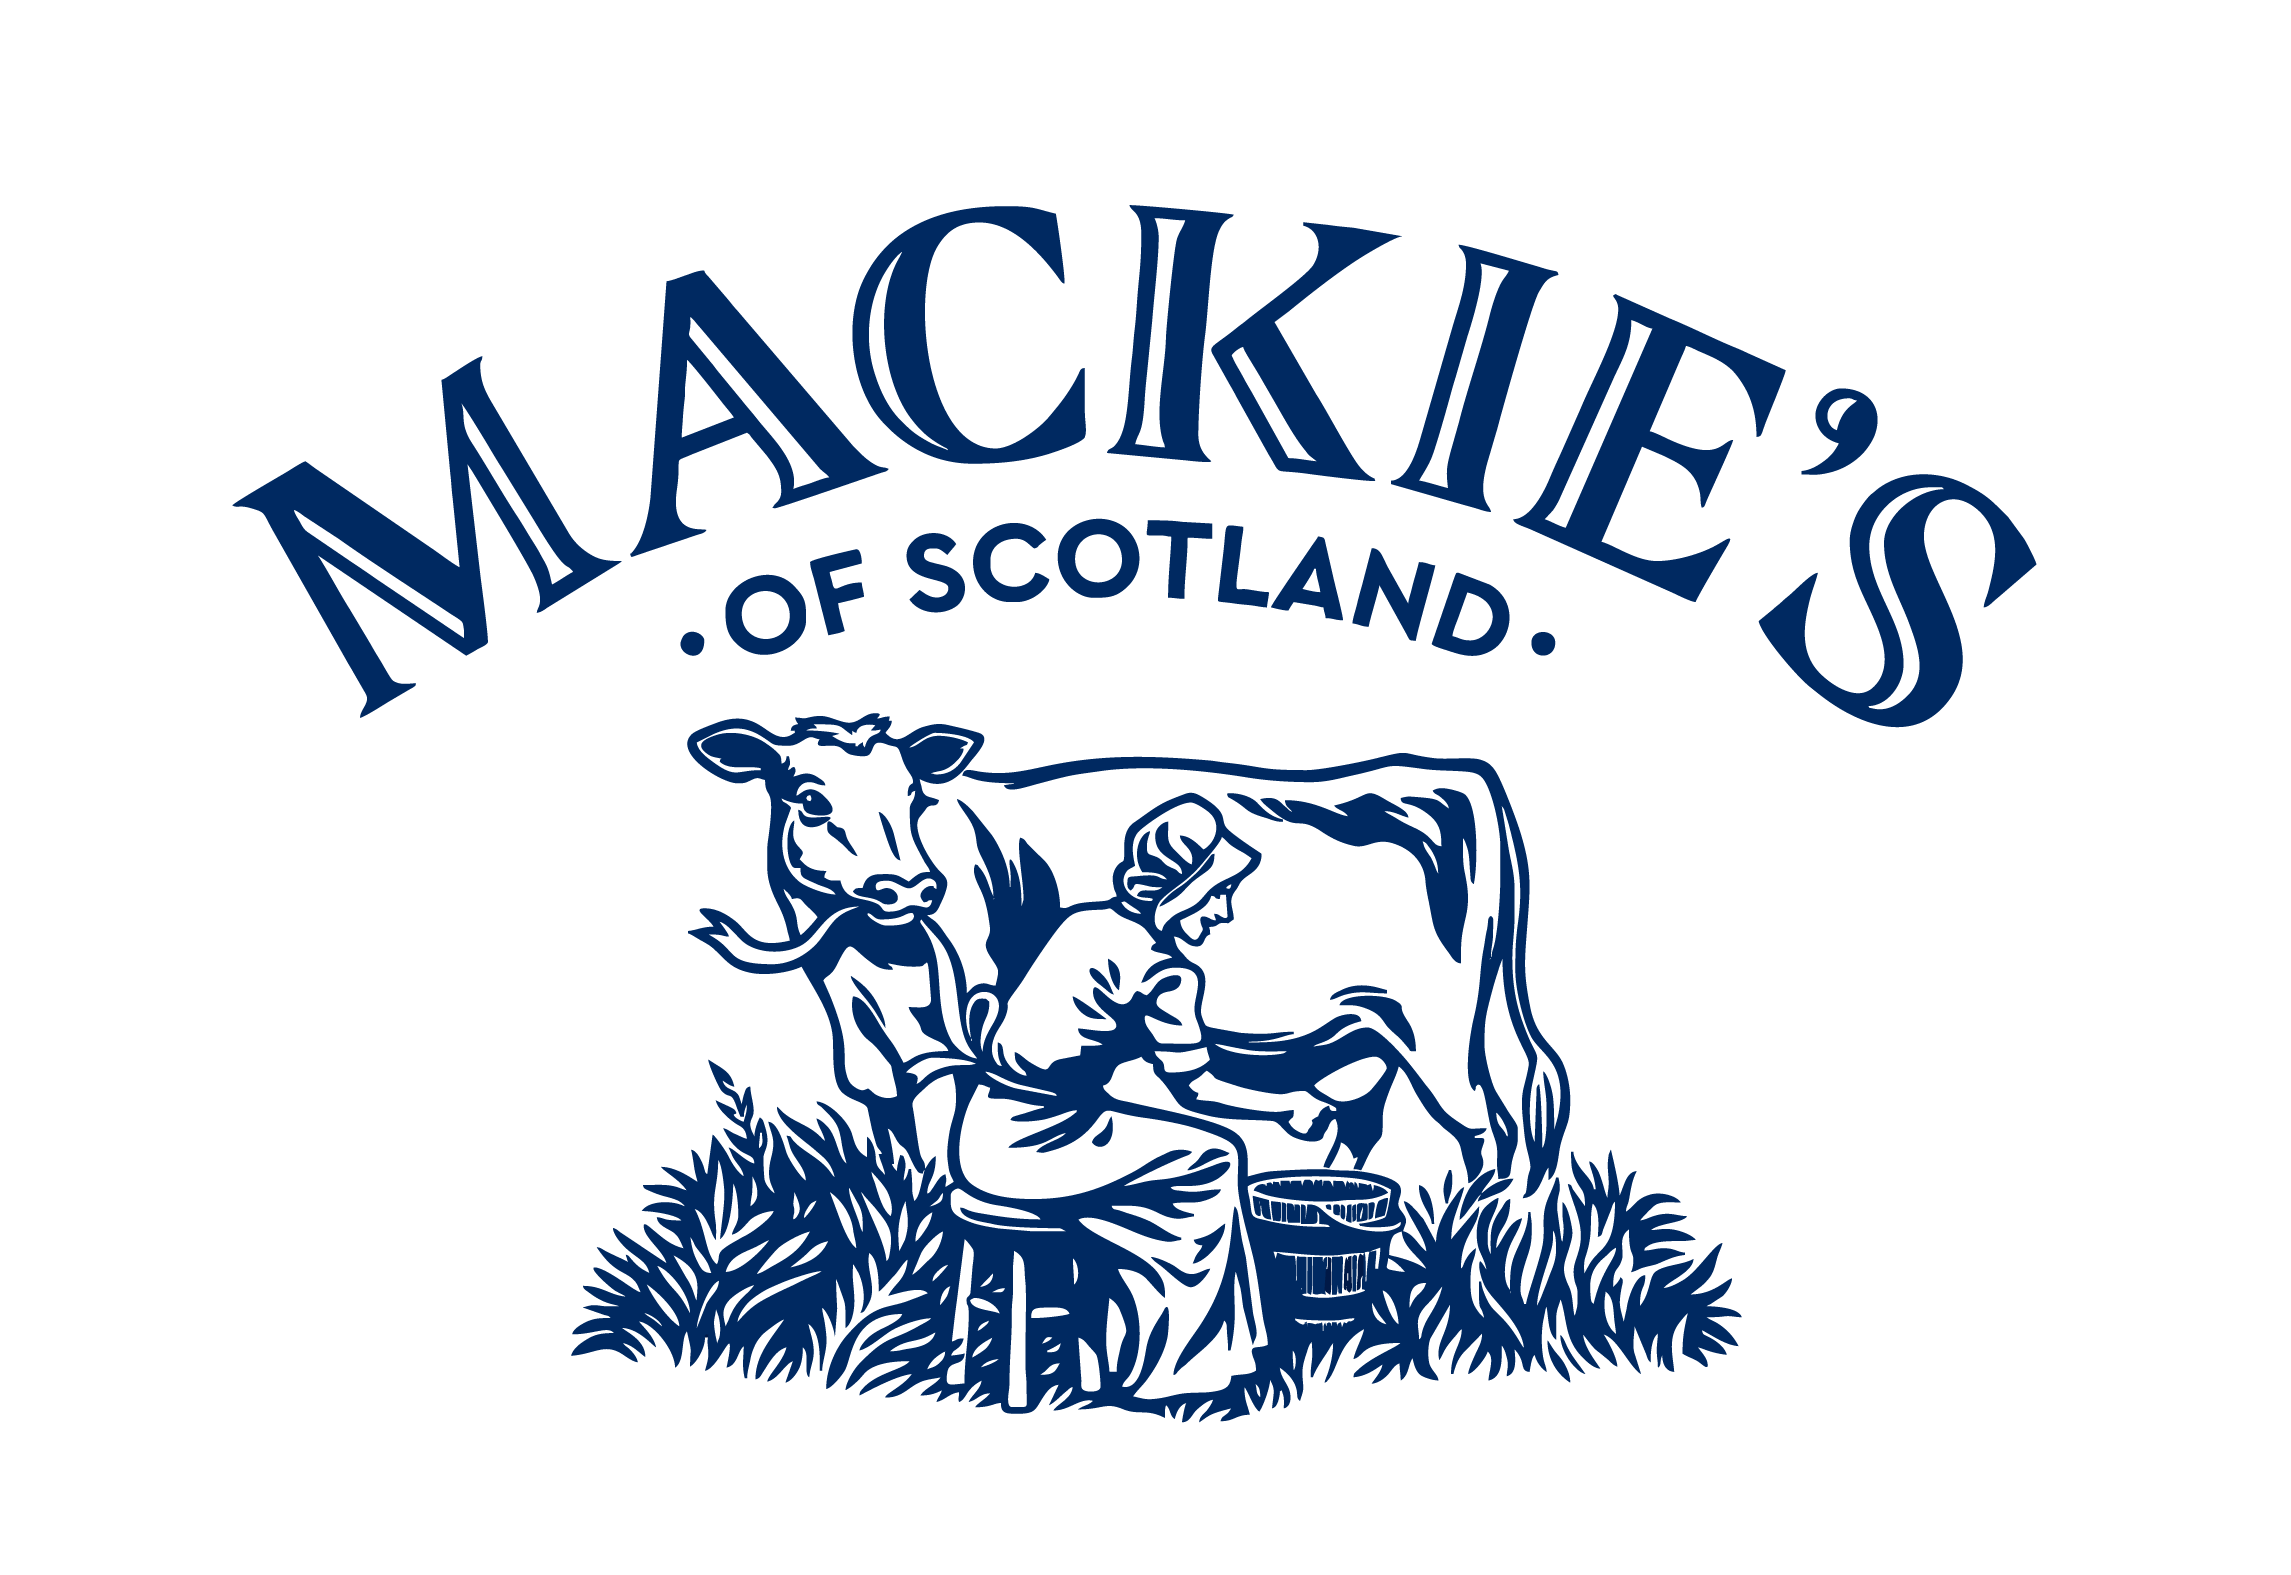 Mackie's of Scotland